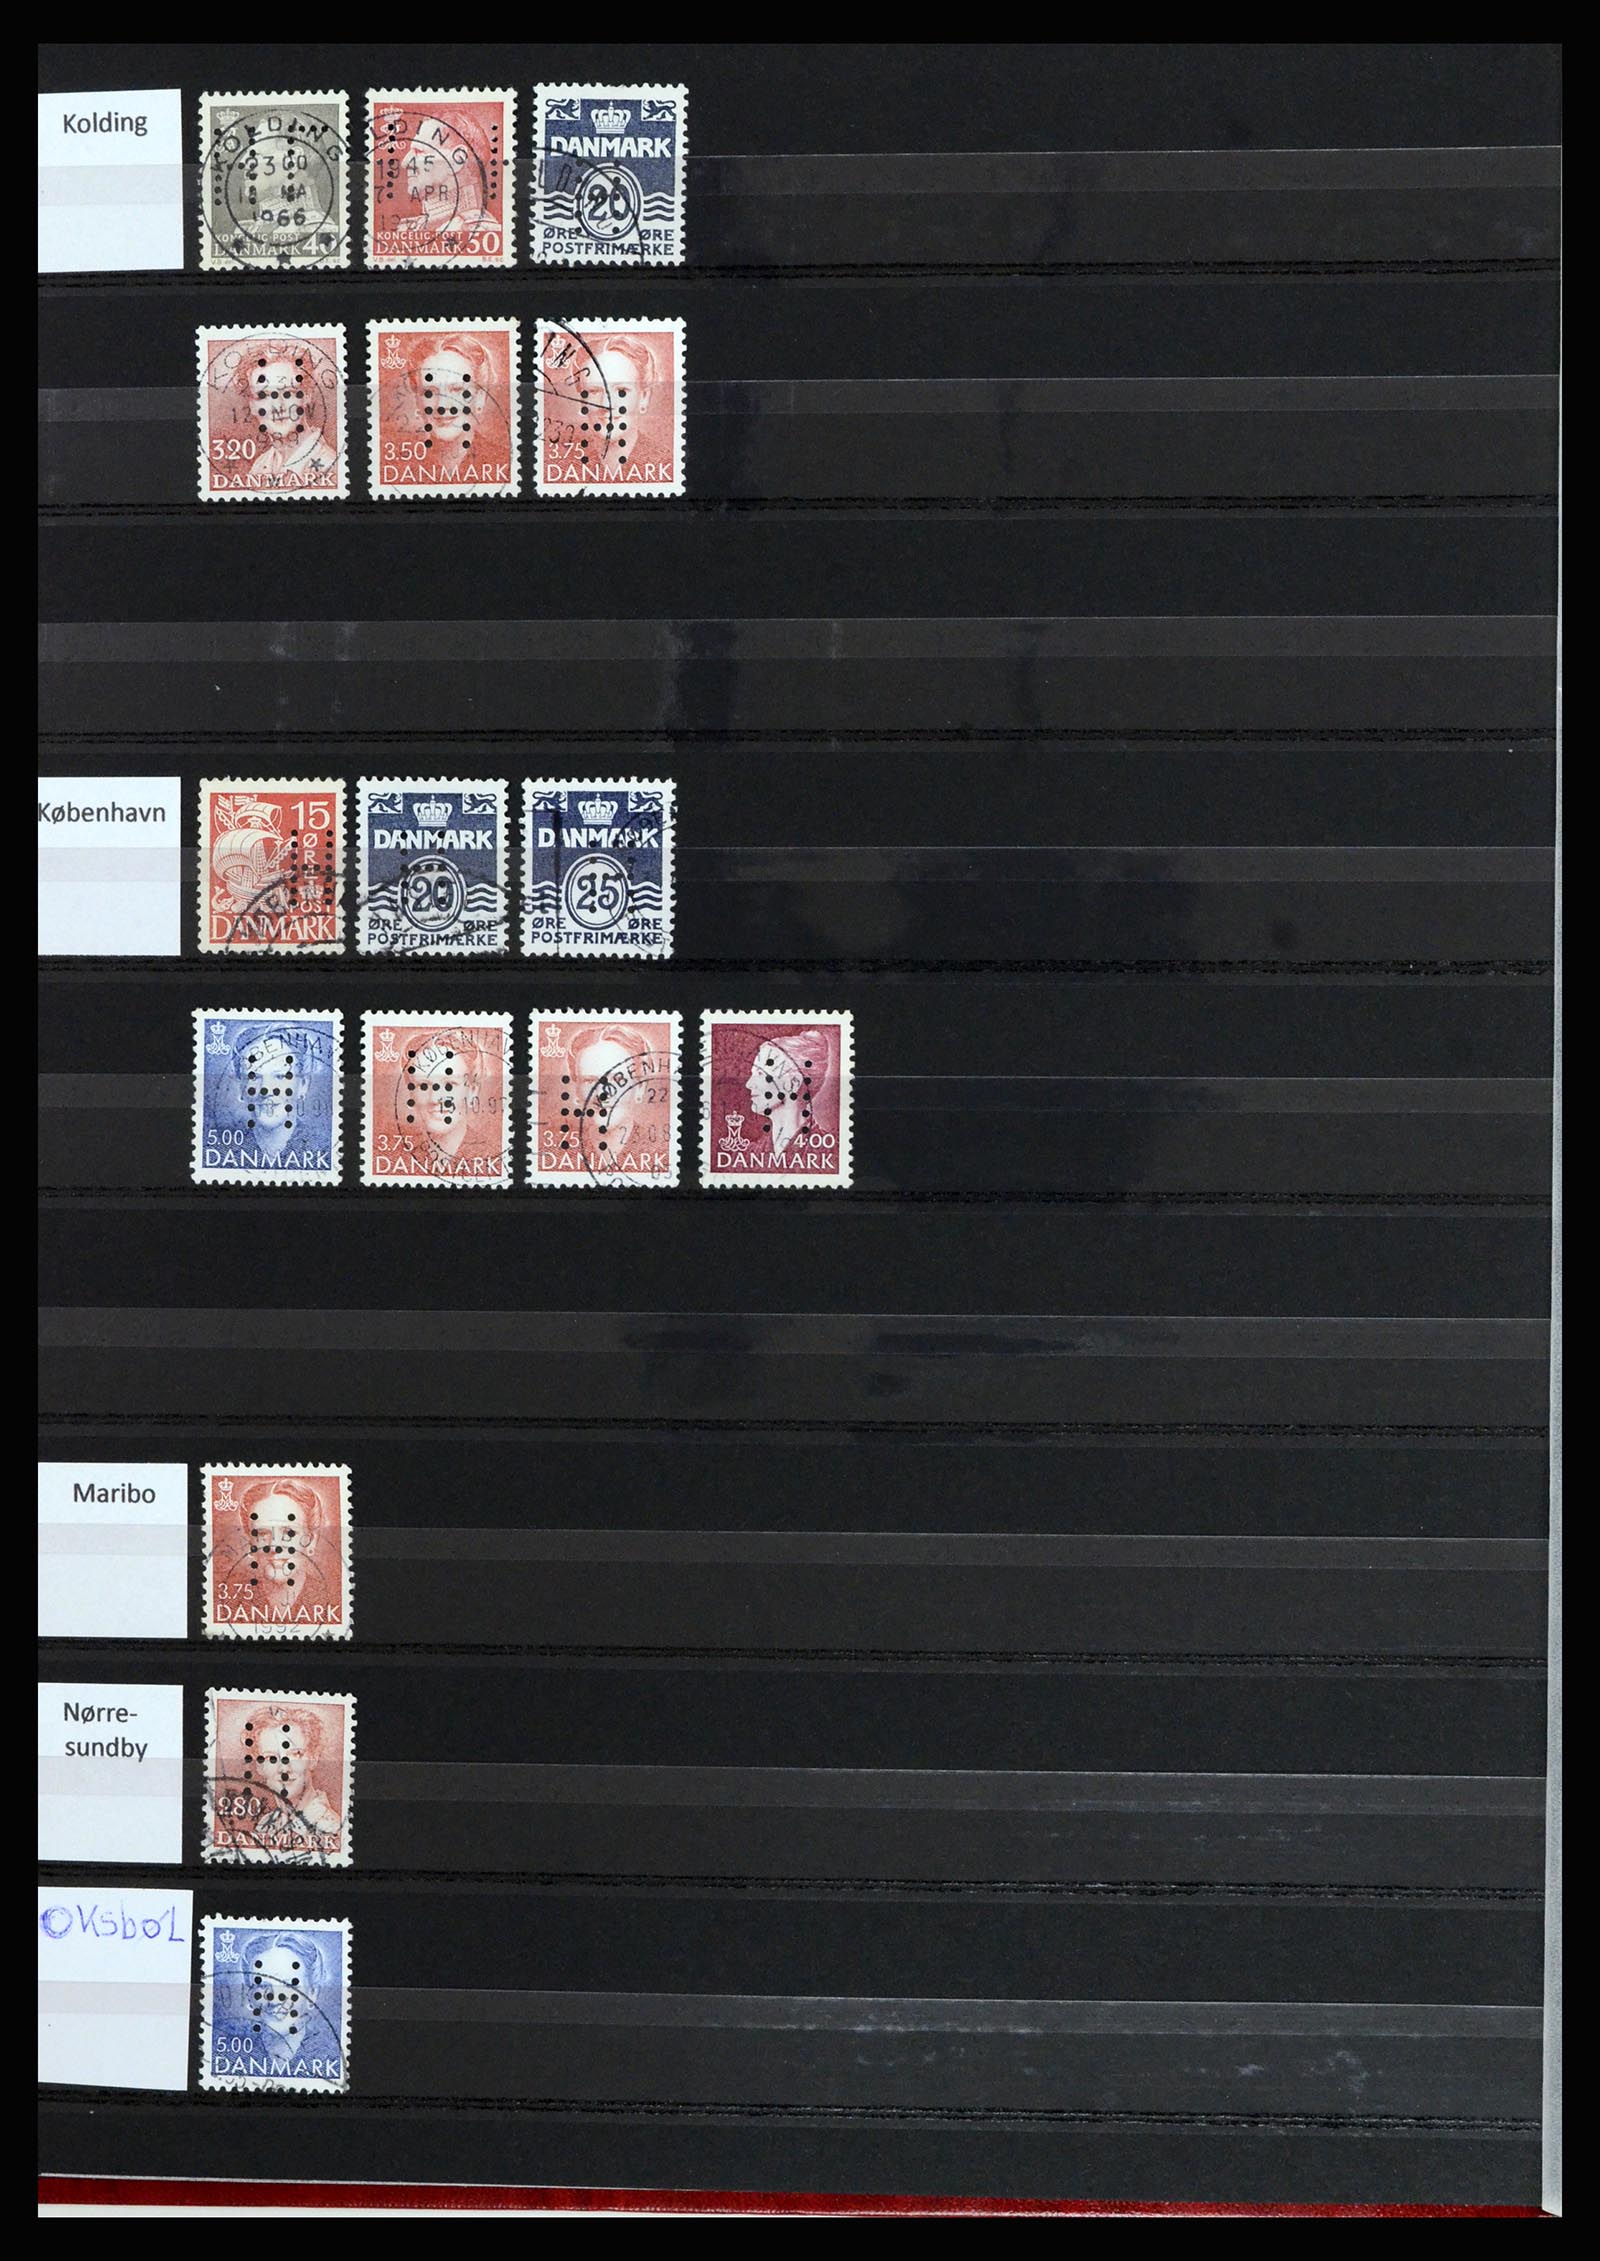 37056 022 - Stamp collection 37056 Denmark perfins.